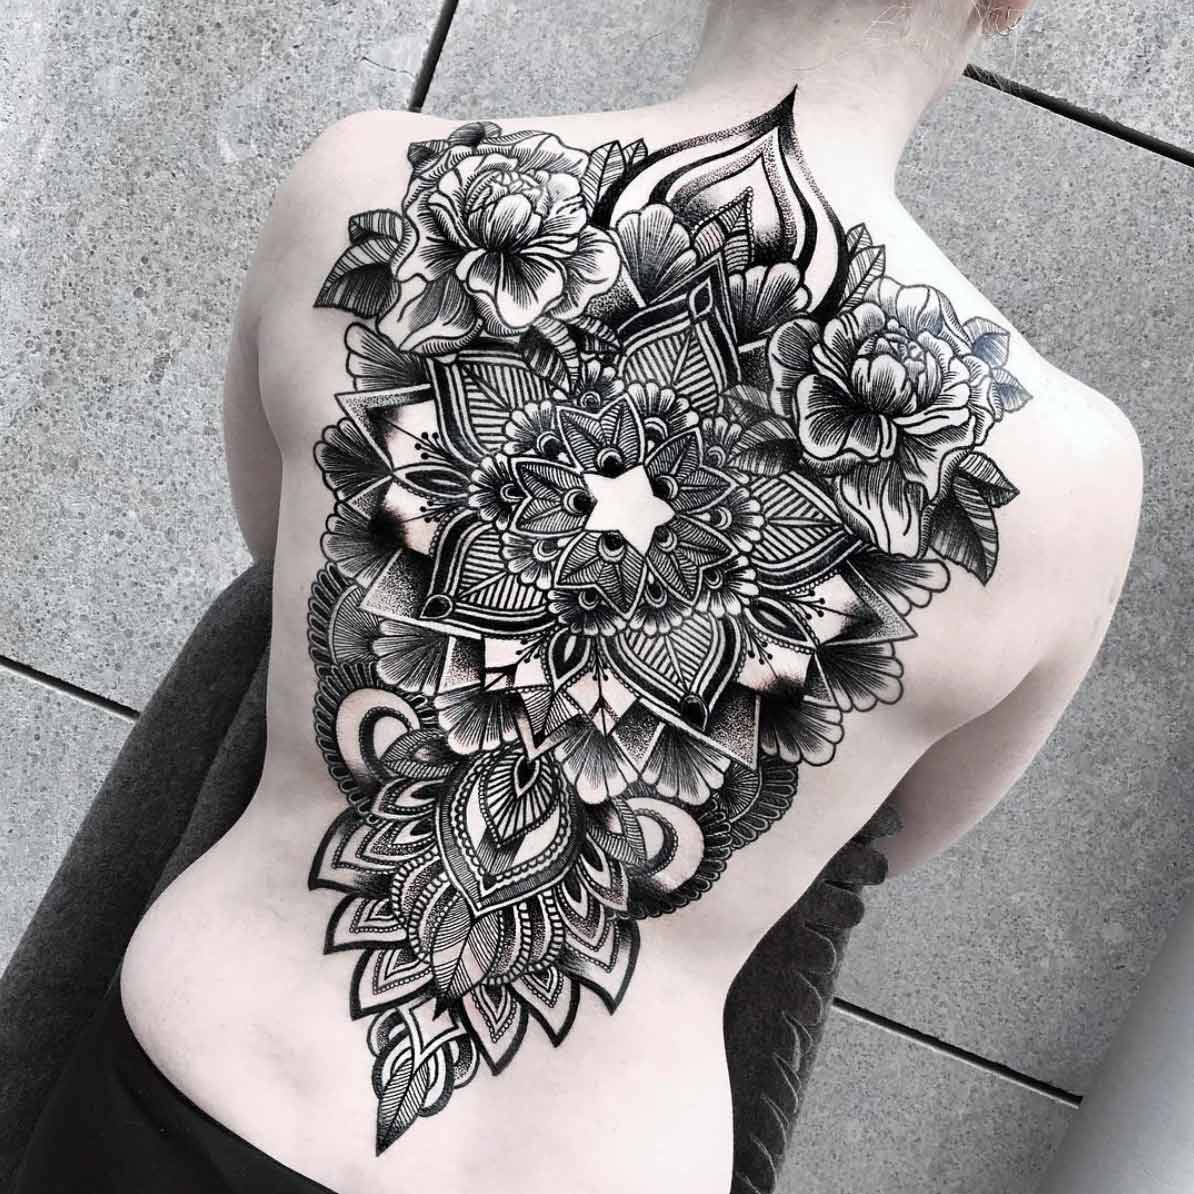 Beautiful back piece by Jessica Svartvit